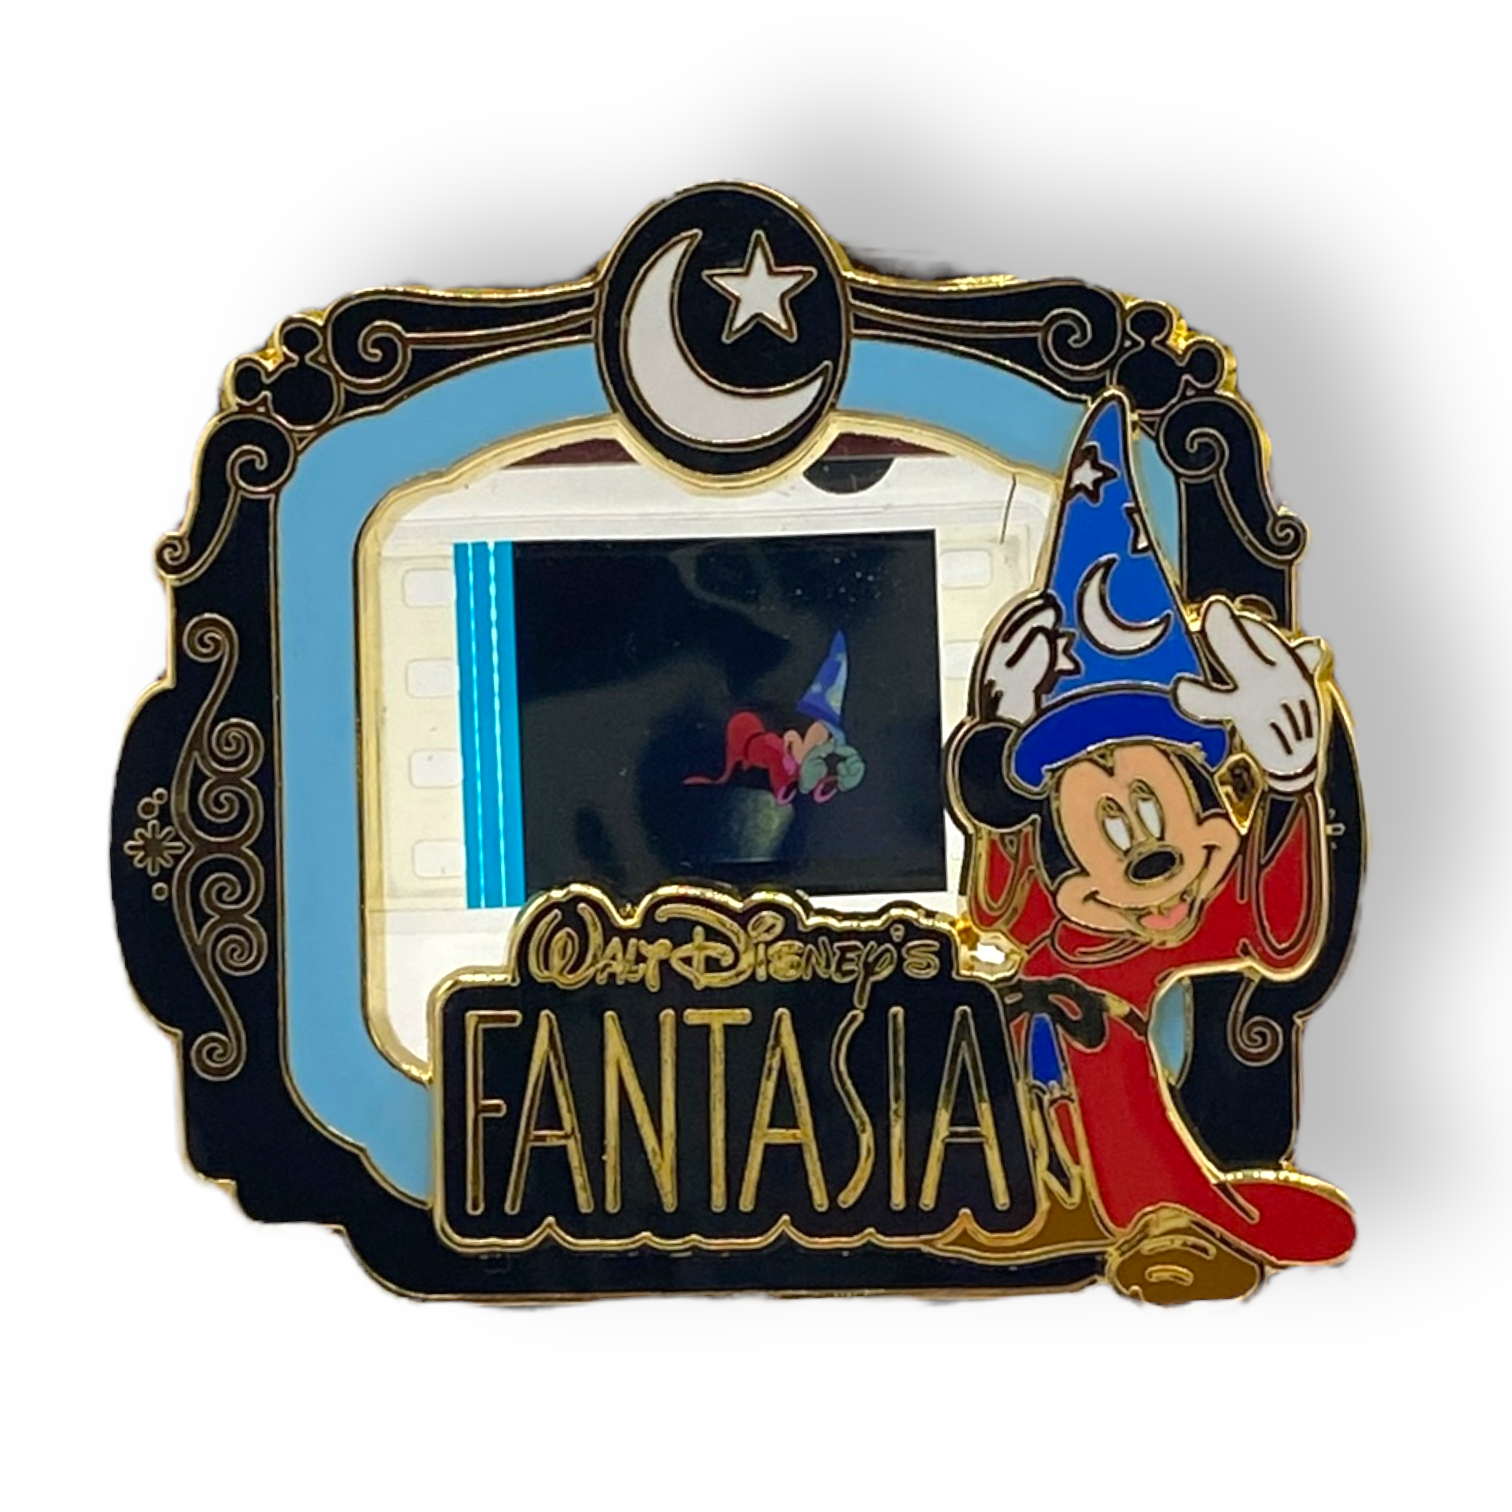 Piece of Disney Movies Fantasia Pin